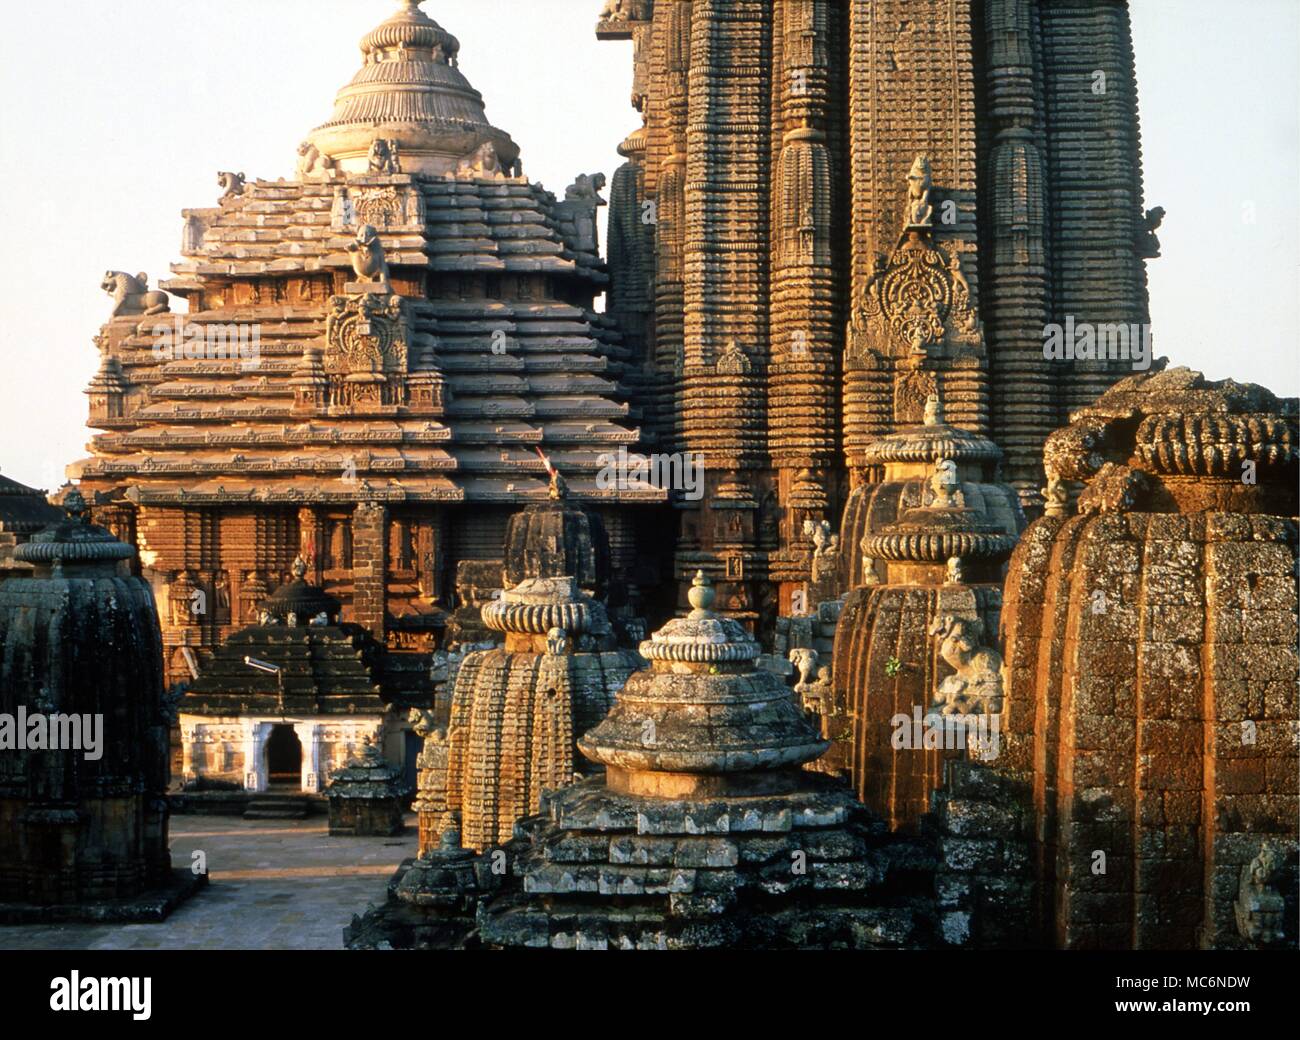 Lingaraj temple, bhubaneswar hi-res stock photography and images - Alamy